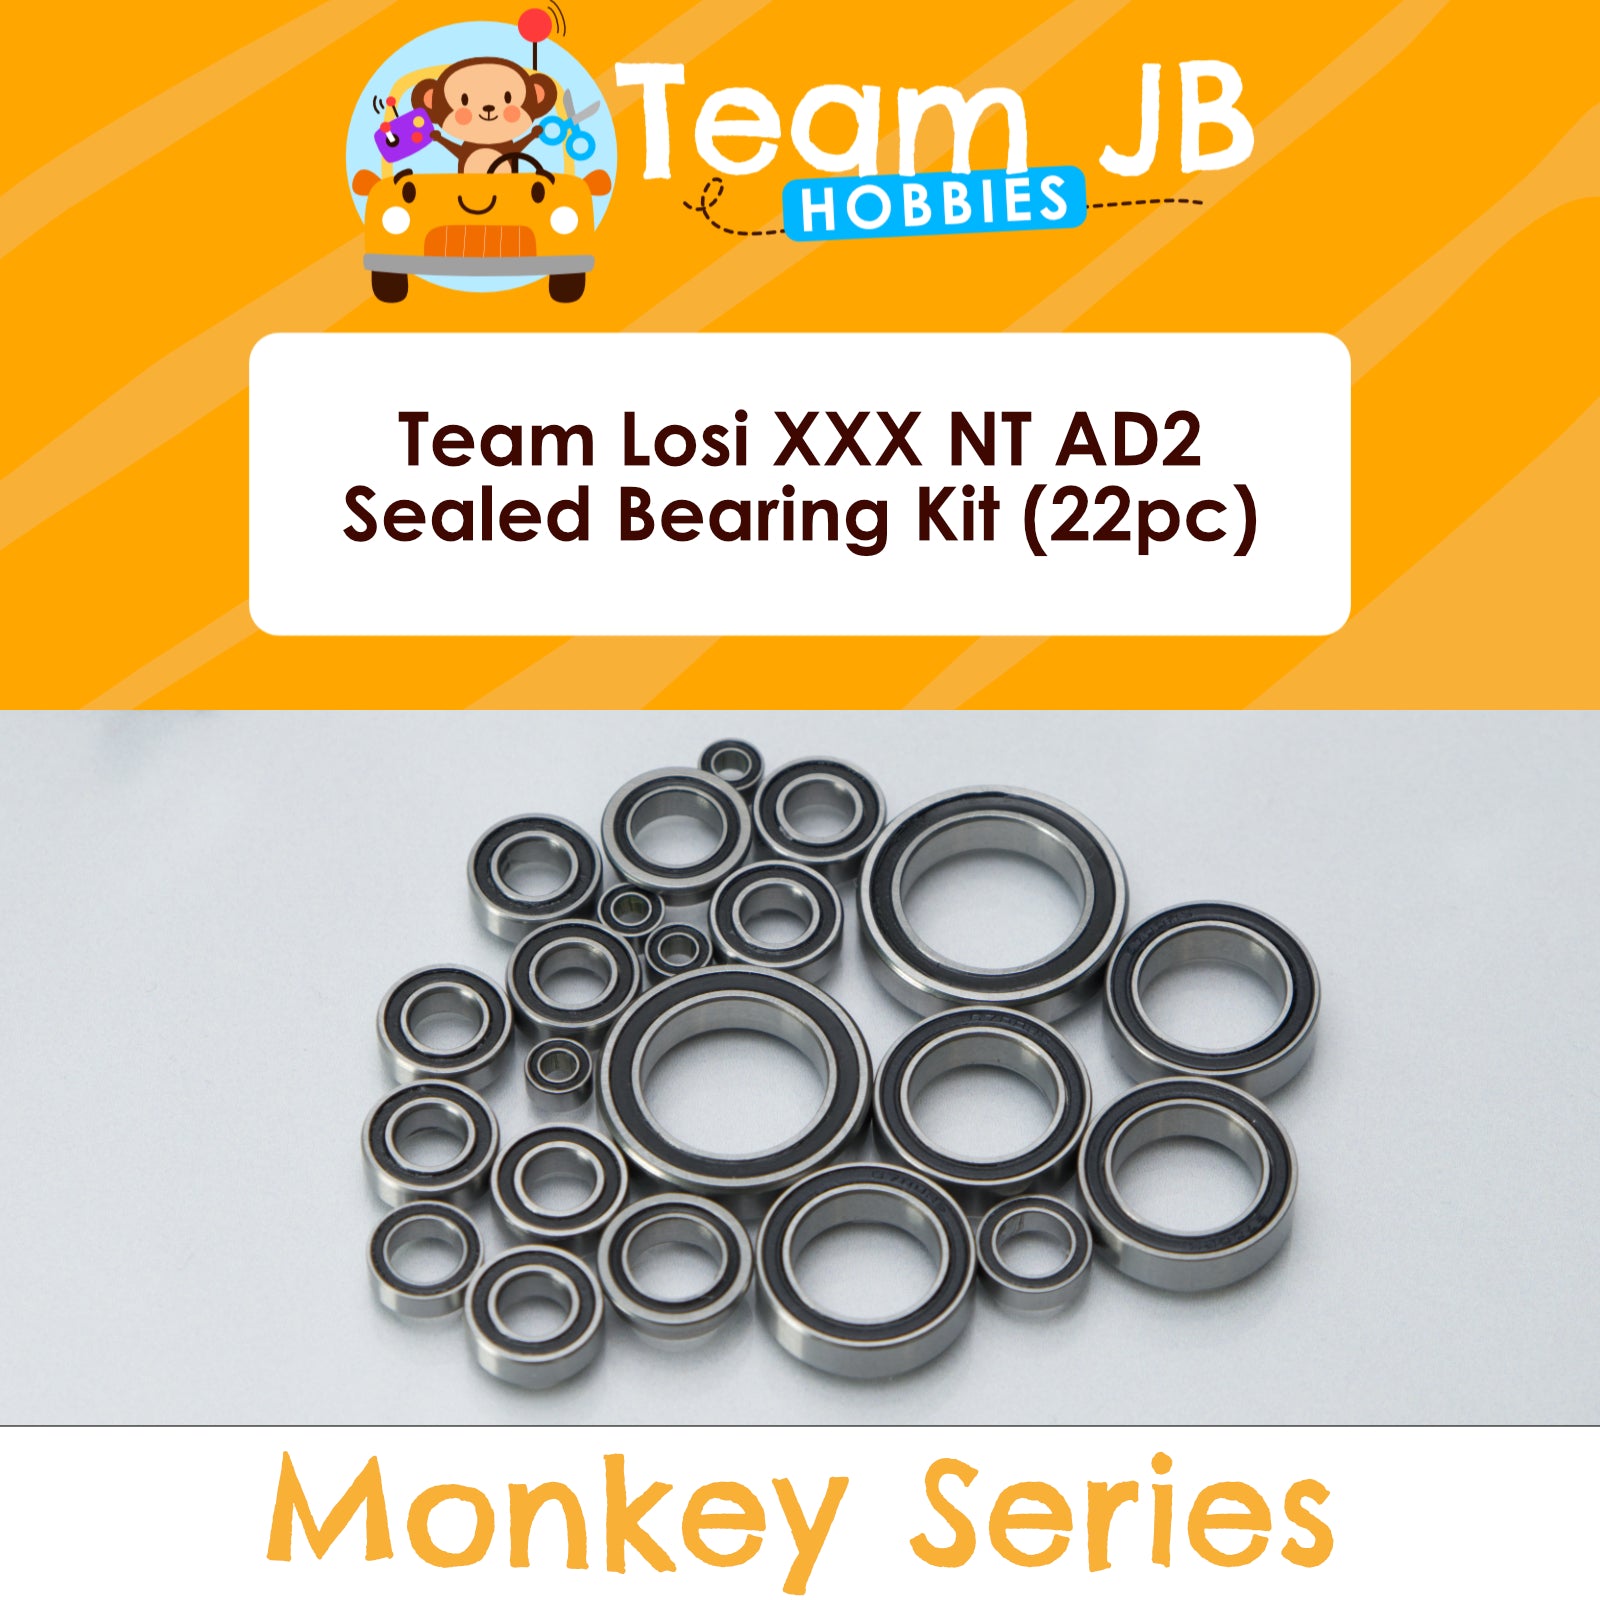 Team Losi XXX NT AD2 - Sealed Bearing Kit